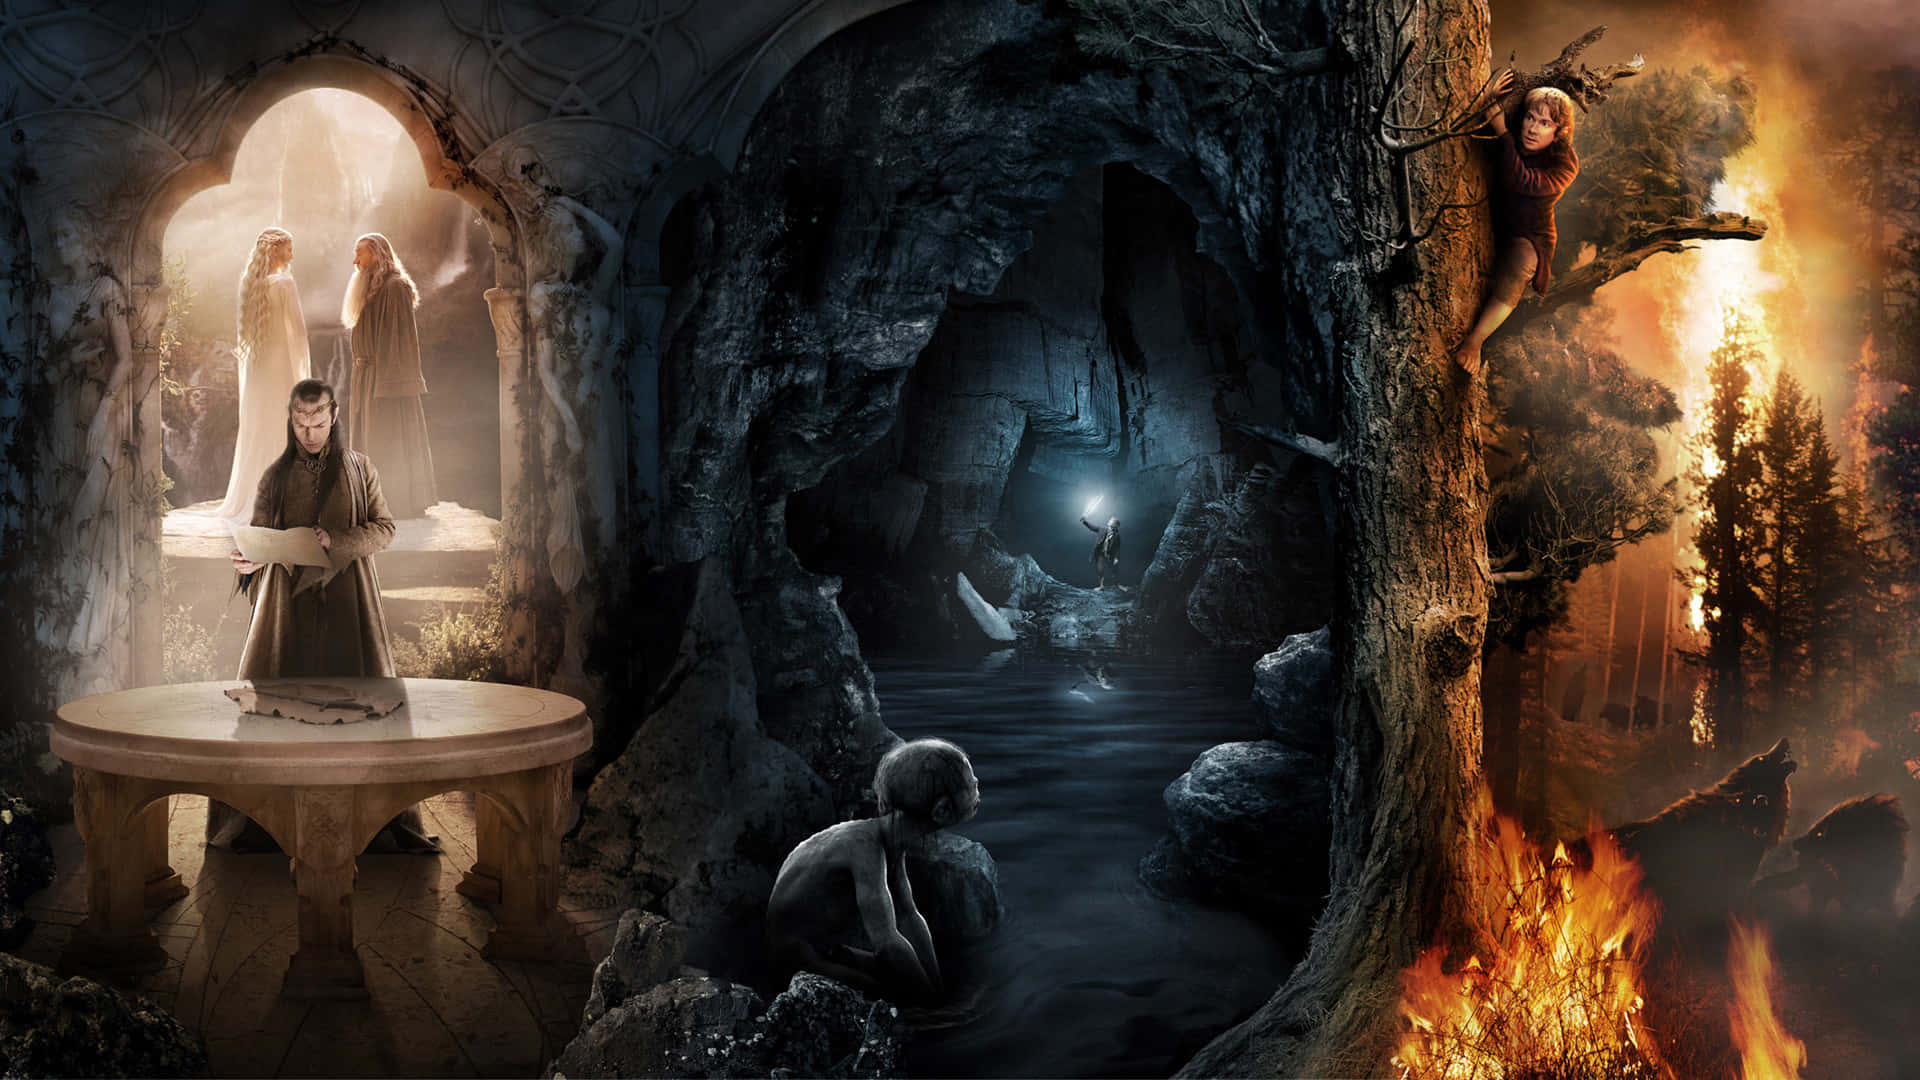 The Hobbit Epic Adventure Collage Wallpaper